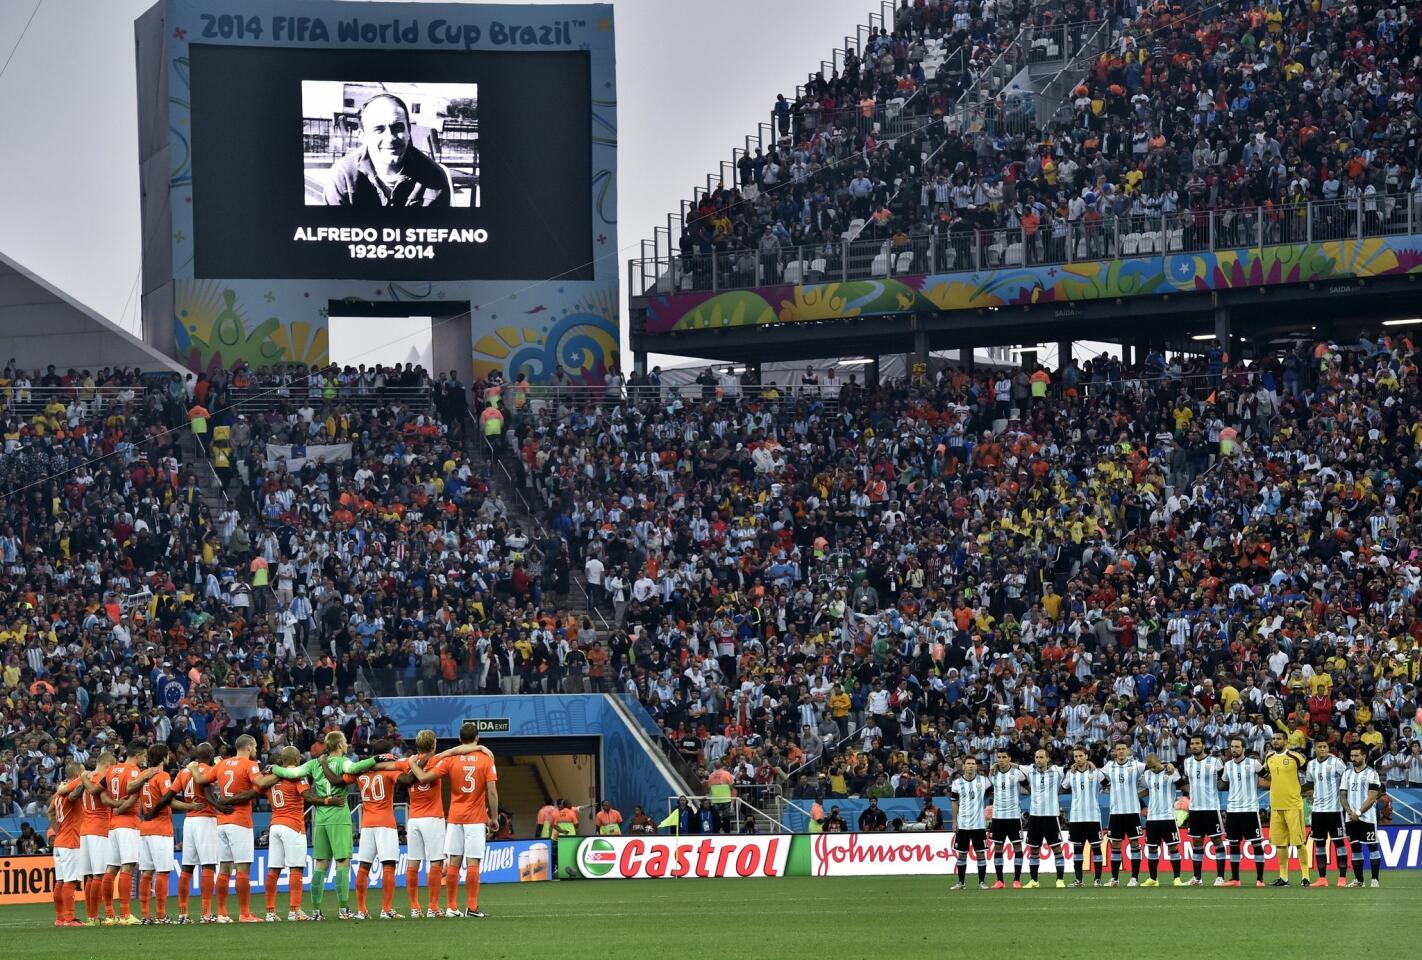 Netherlands versus Argentina, World Cup semifinal